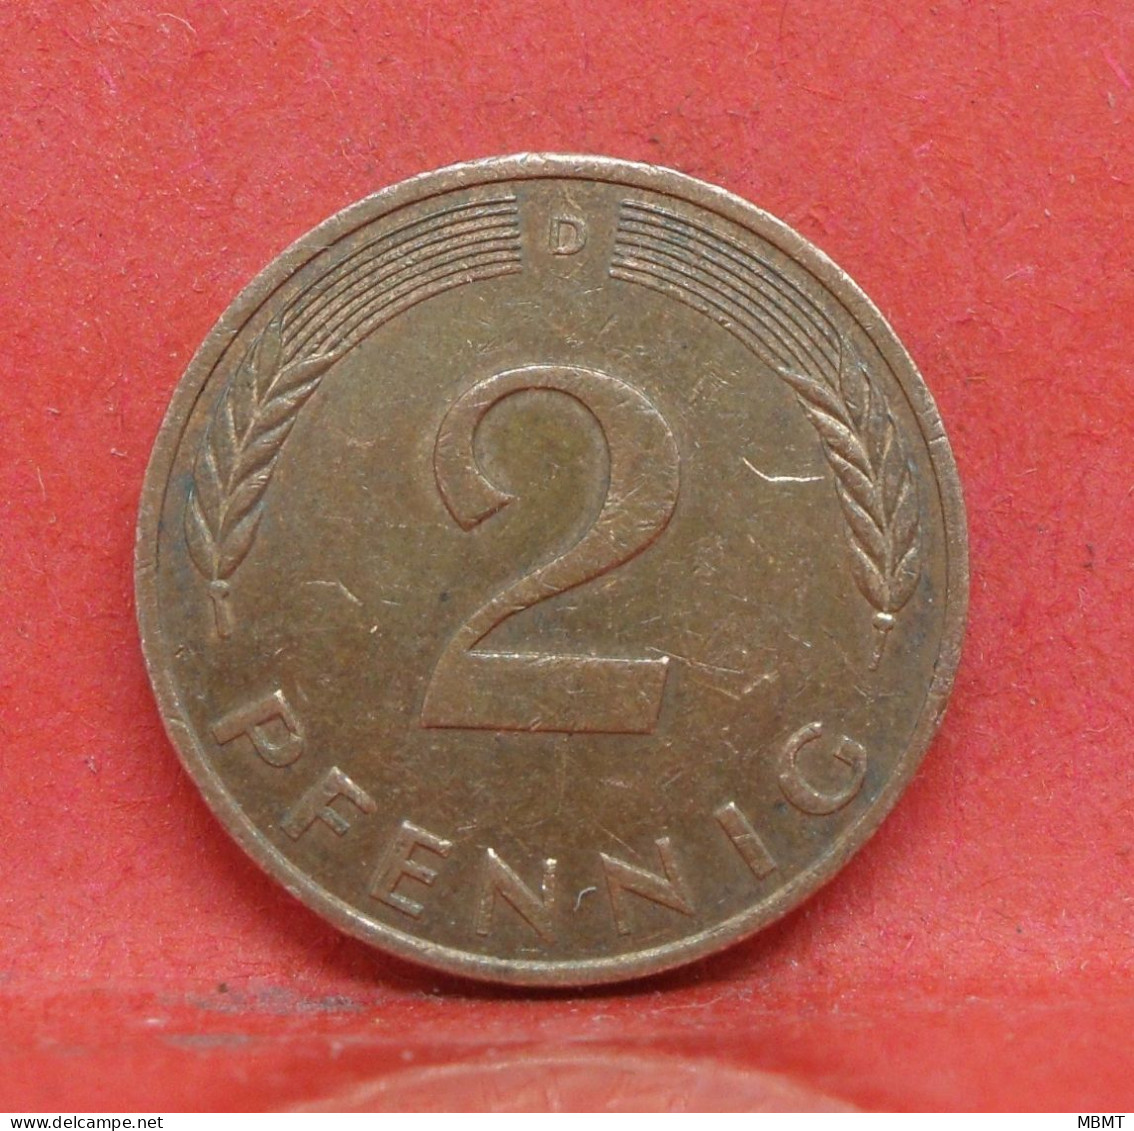 2 Pfennig 1991 D - TTB  - Pièce Monnaie Allemagne - Article N°1423 - 2 Pfennig